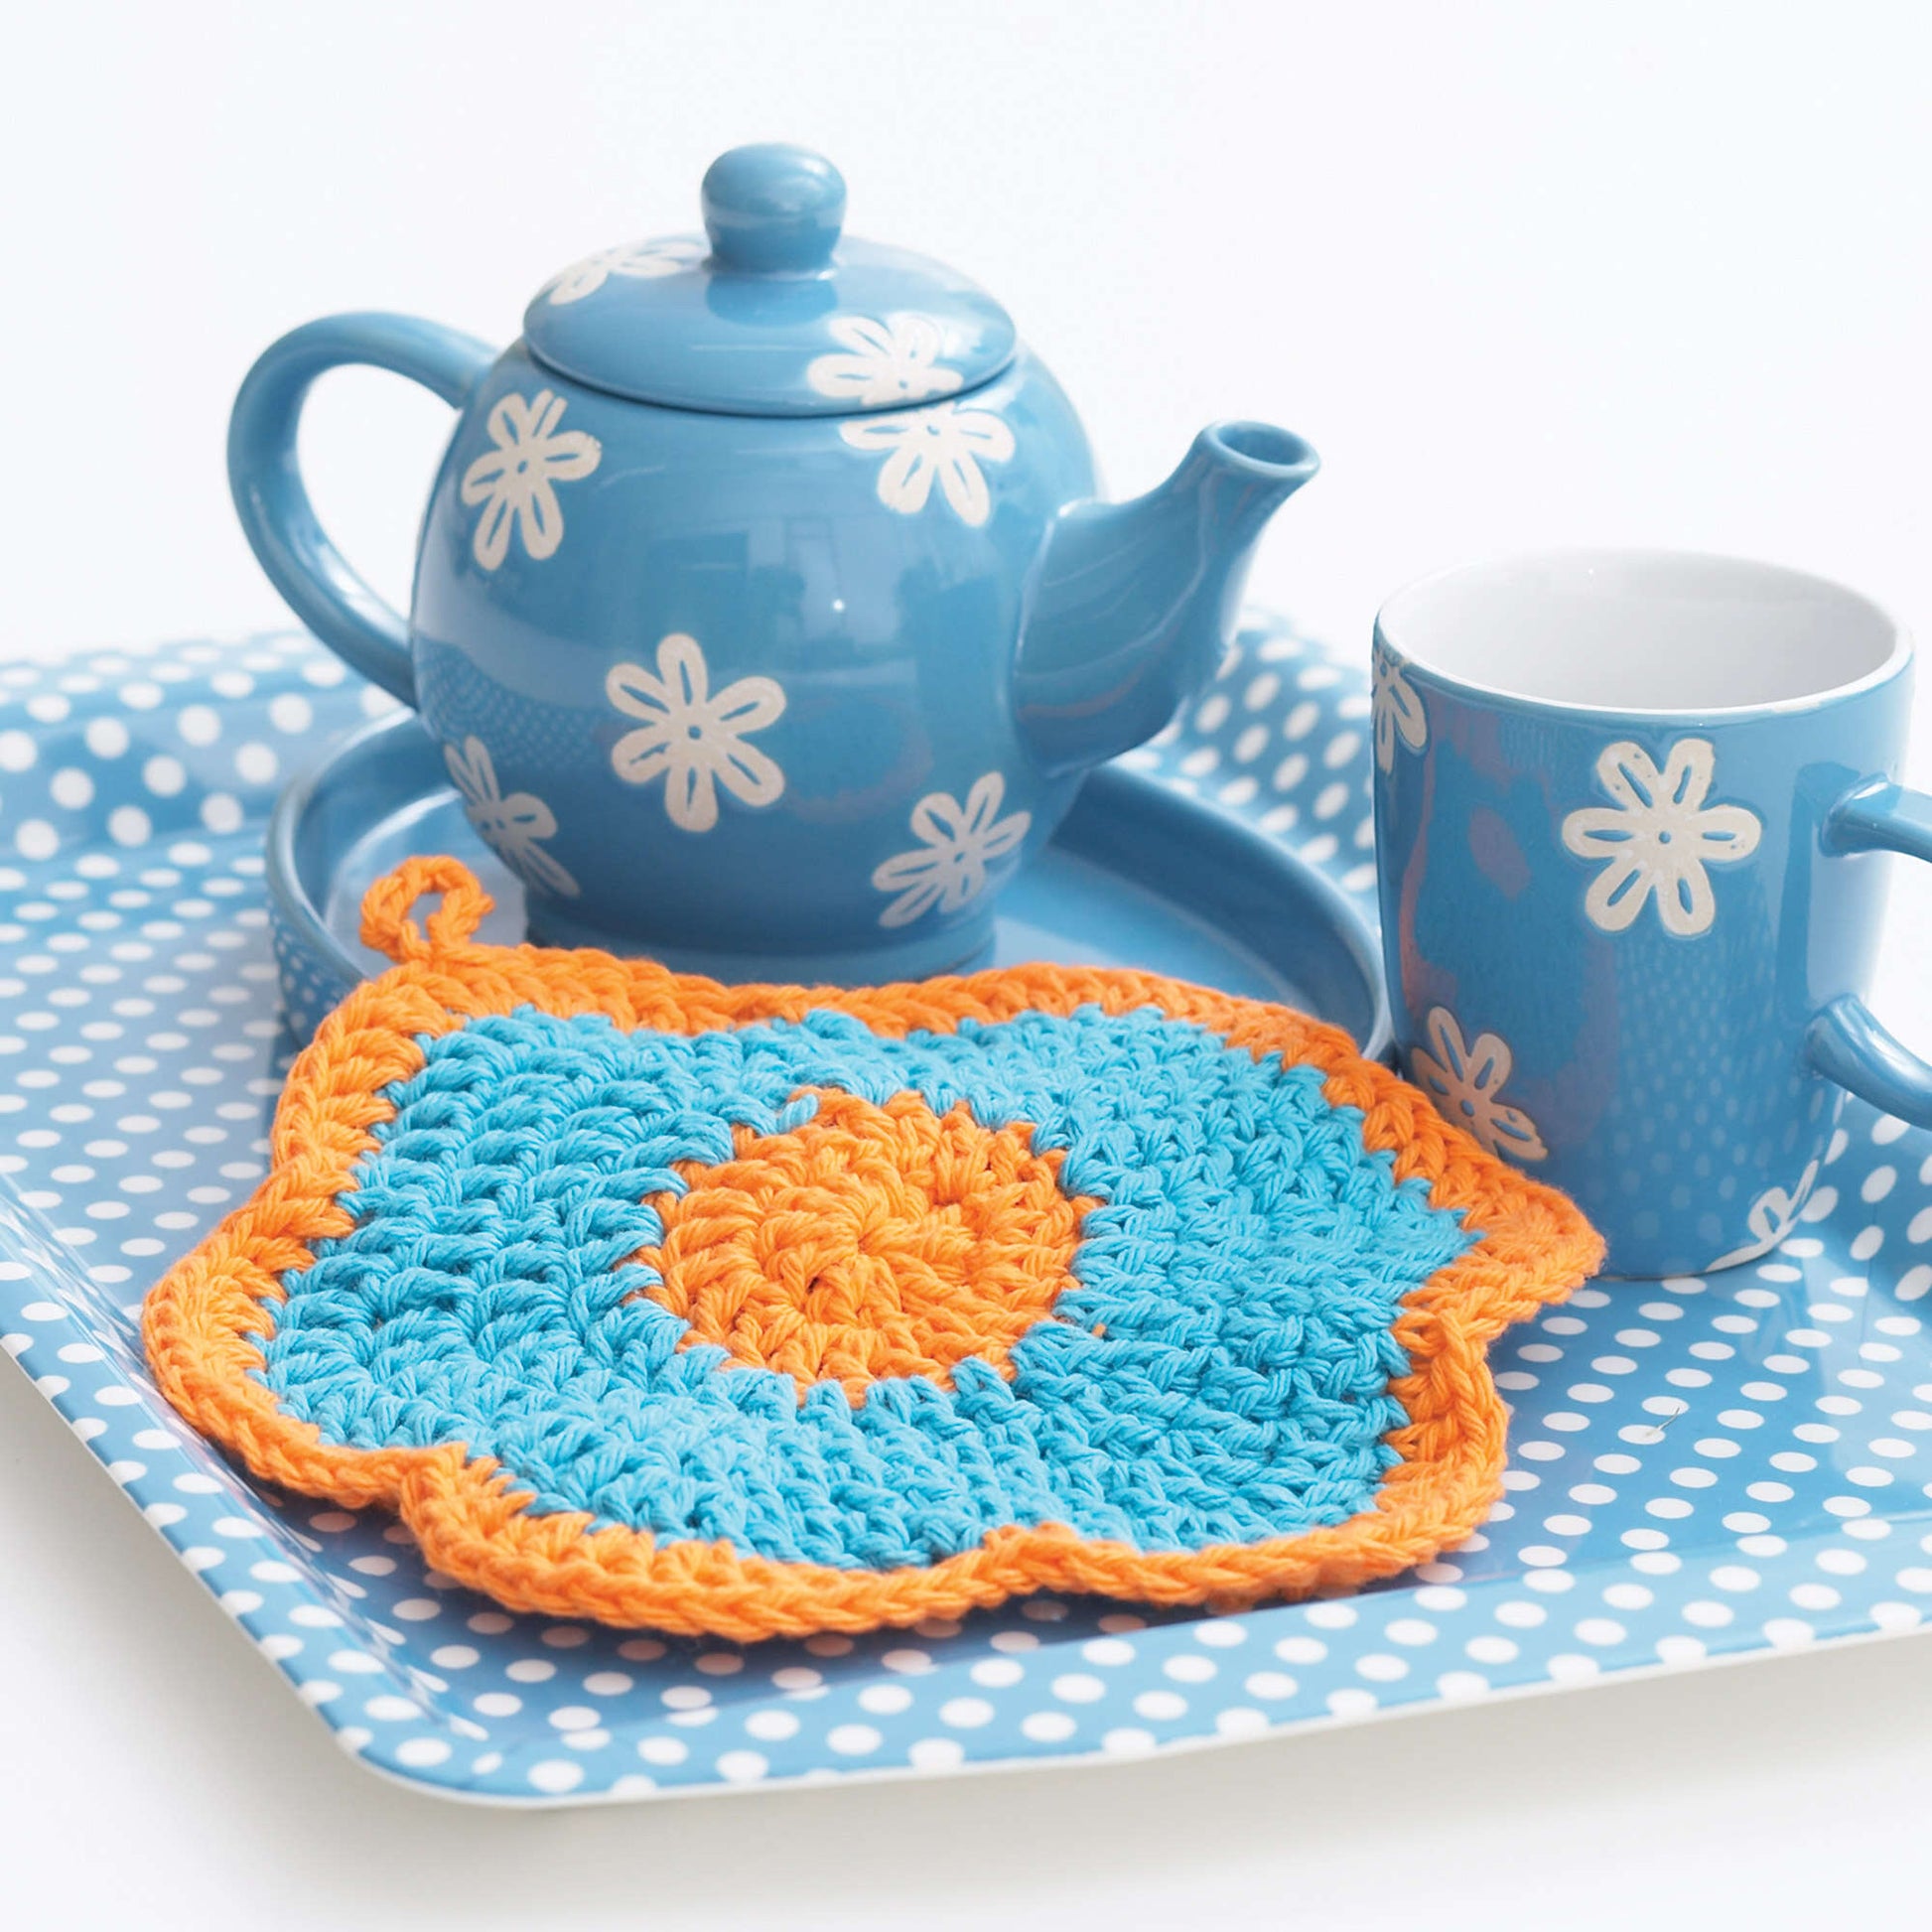 Bernat Primrose Dishcloth Crochet Dishcloth made in Bernat Handicrafter Cotton yarn